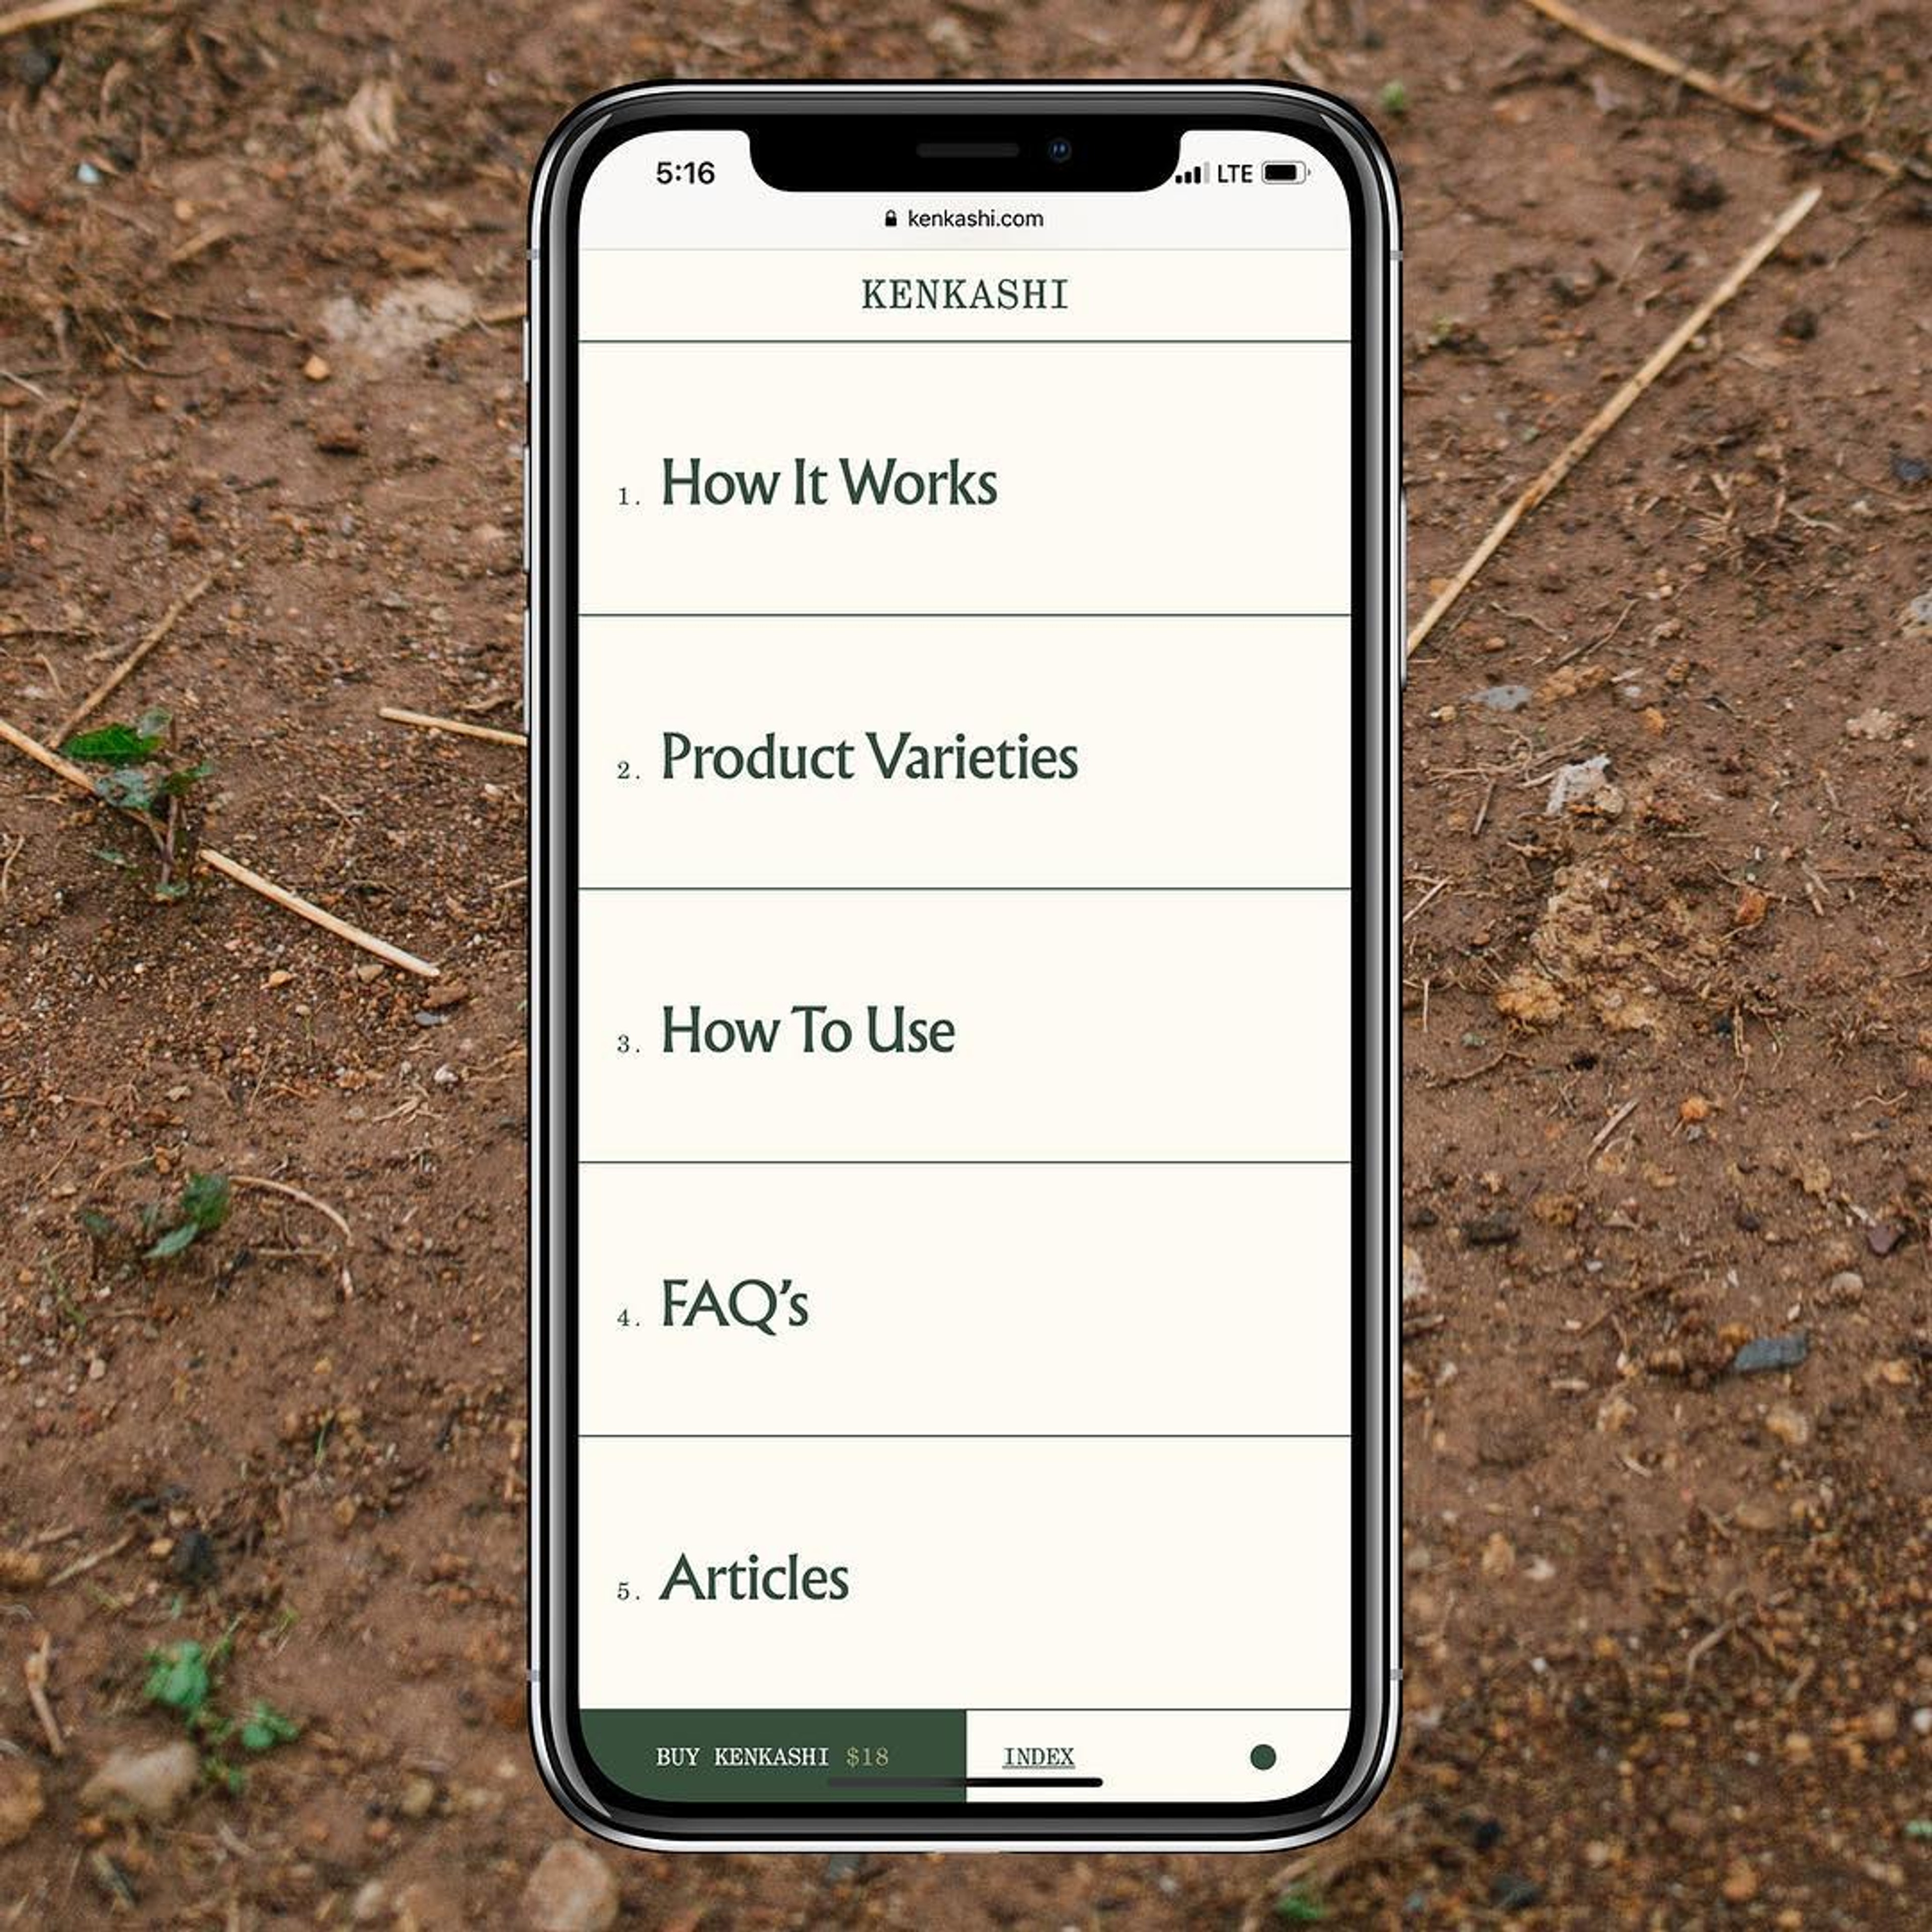 kenkashi site menu on mobile set on picture of dirt